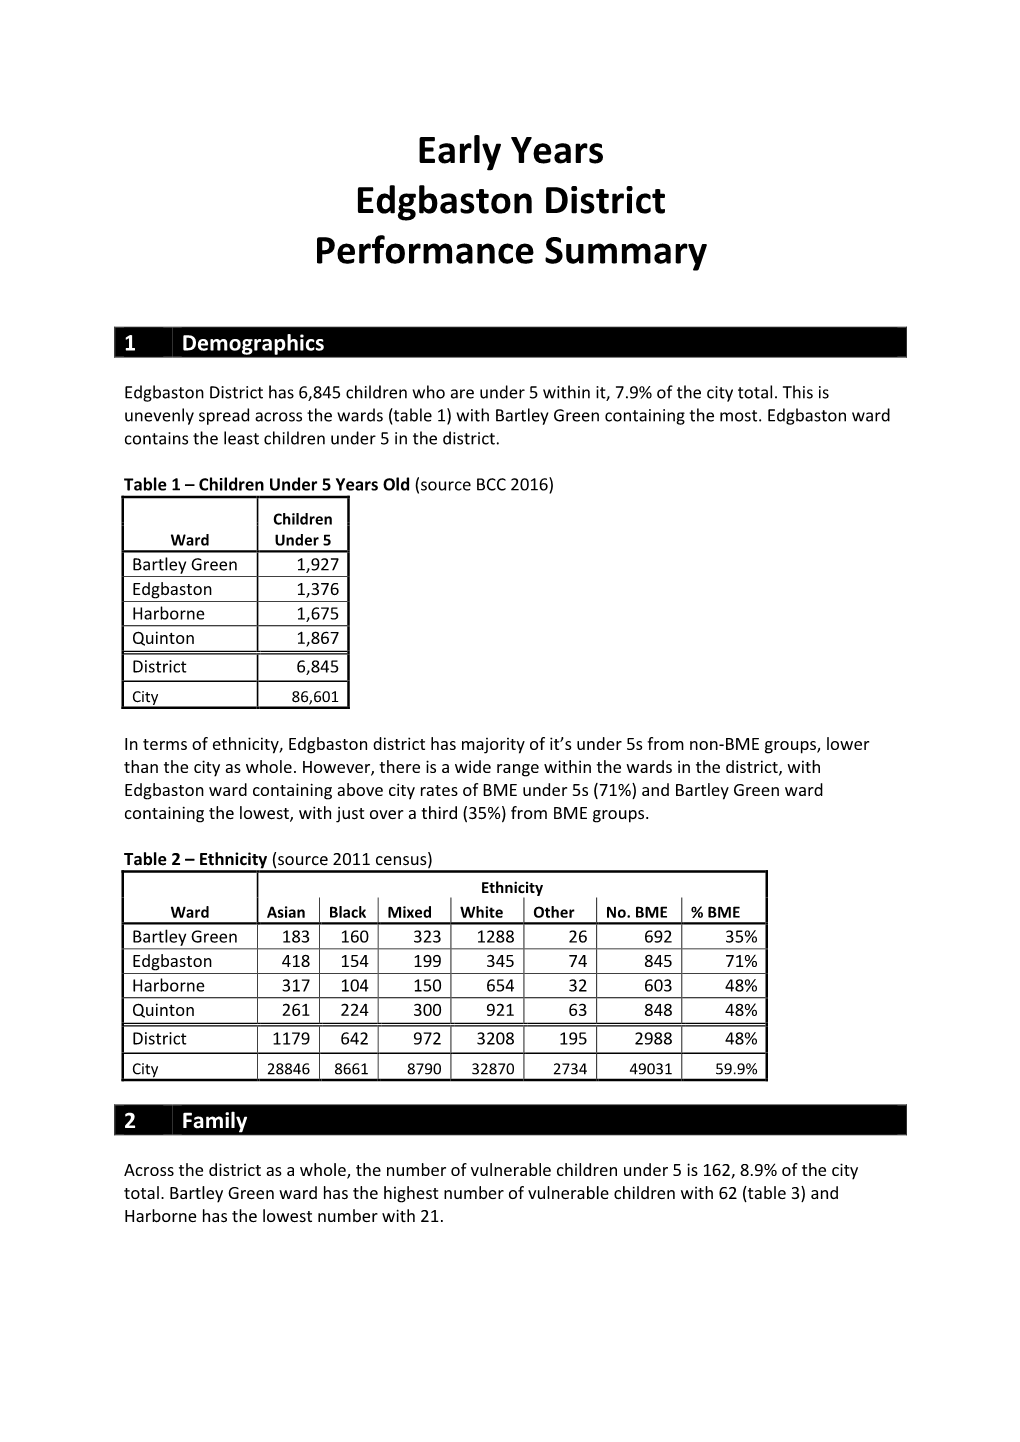 Early Years Edgbaston District Performance Summary